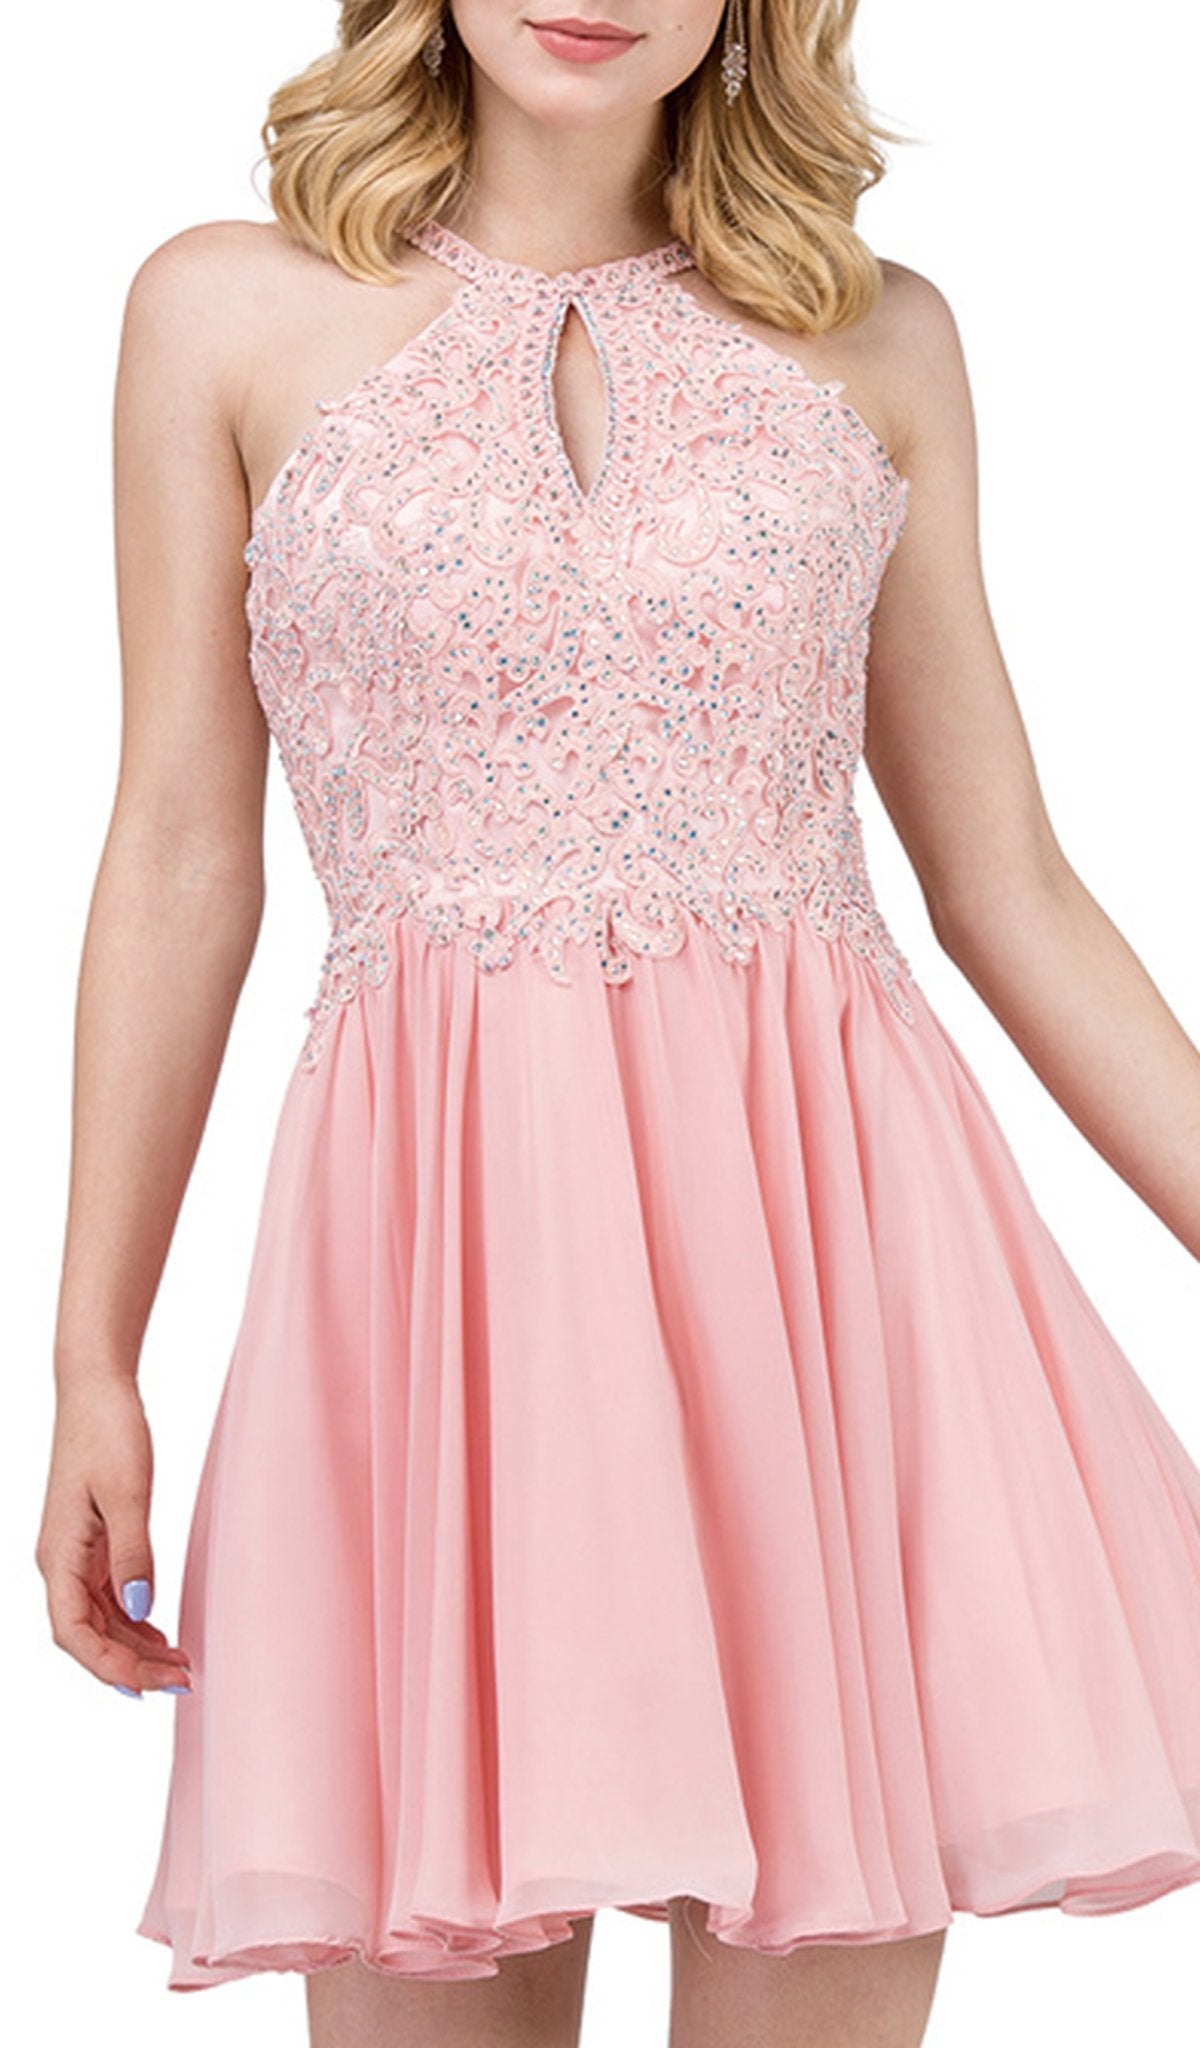 Dancing Queen - 3043 Beaded Lace Halter Homecoming Dress in Pink